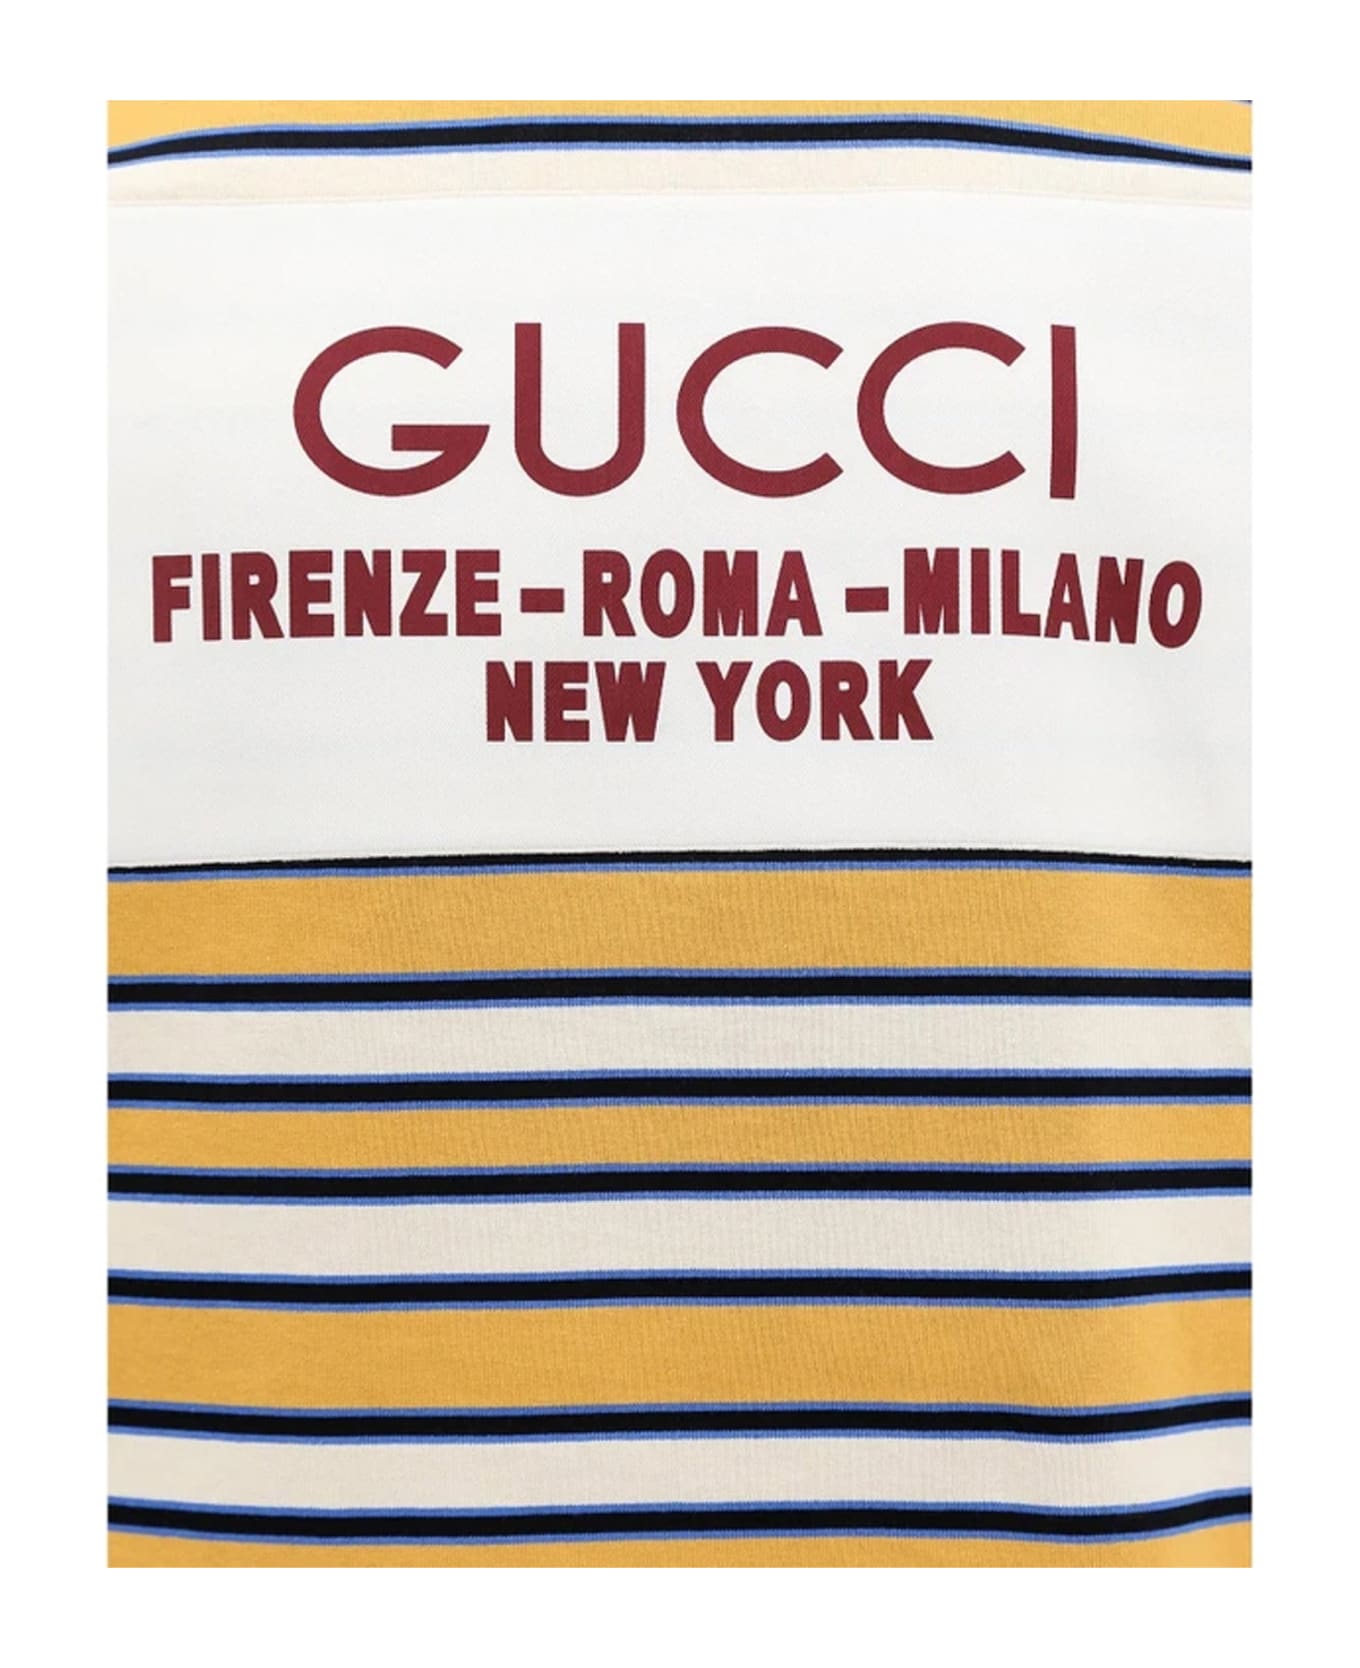 Gucci Striped Polo Shirt - Yellow